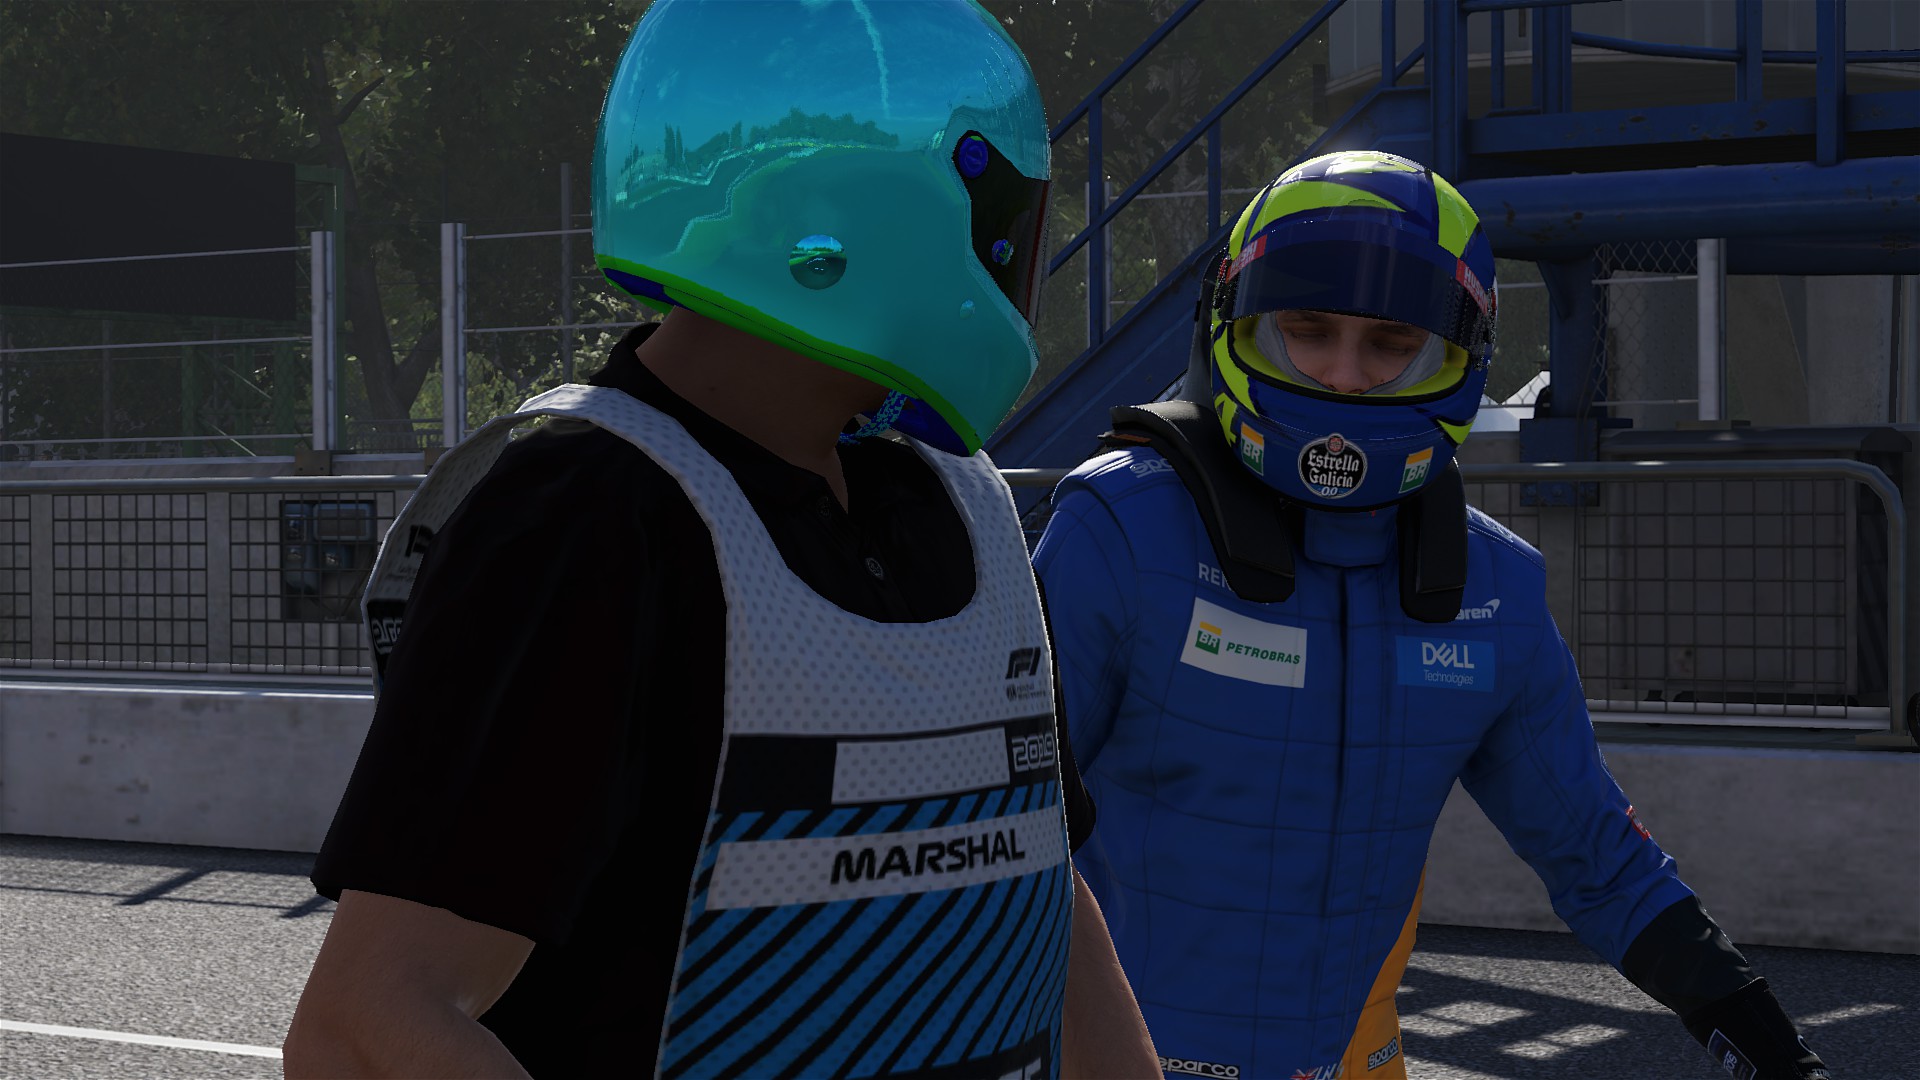 Lando Norris' helmet for 2019 Italian GP | RaceDepartment